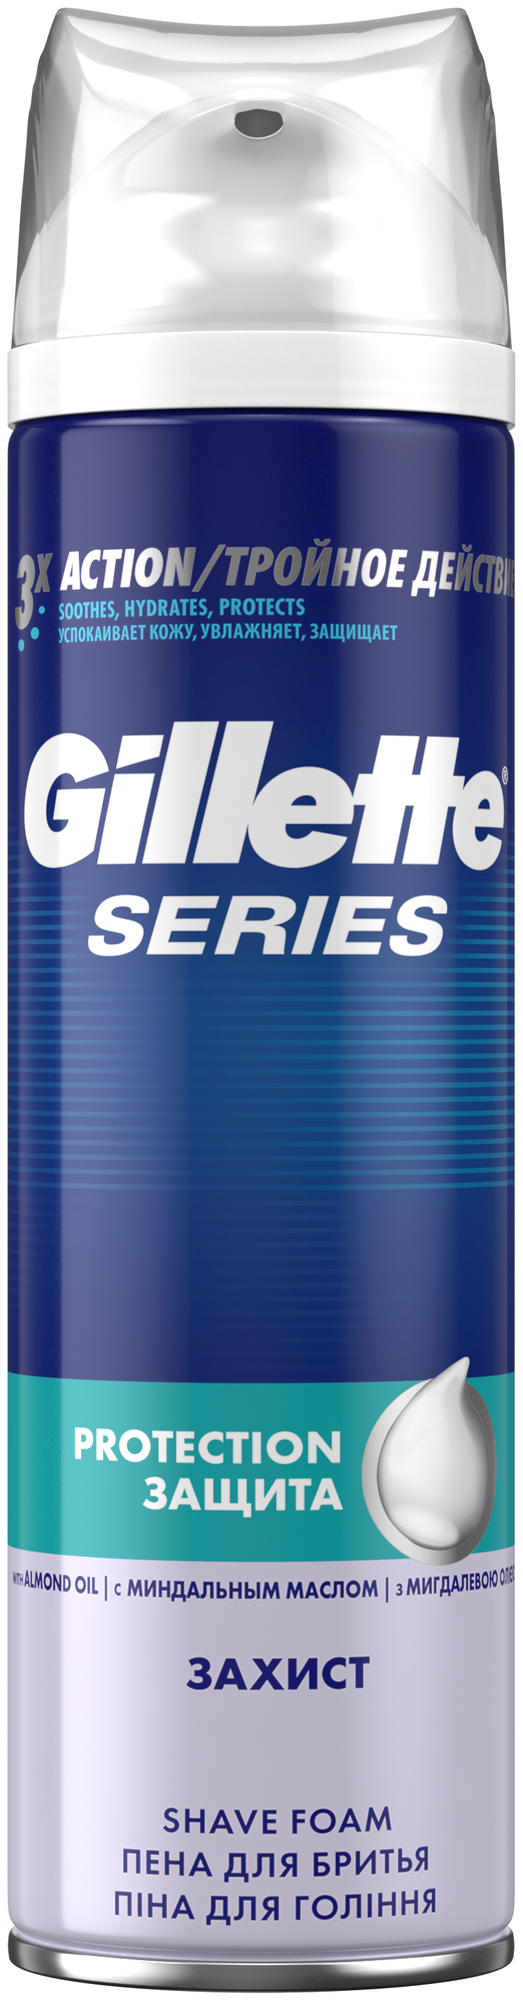 Пена для бритья Series Protection Gillette